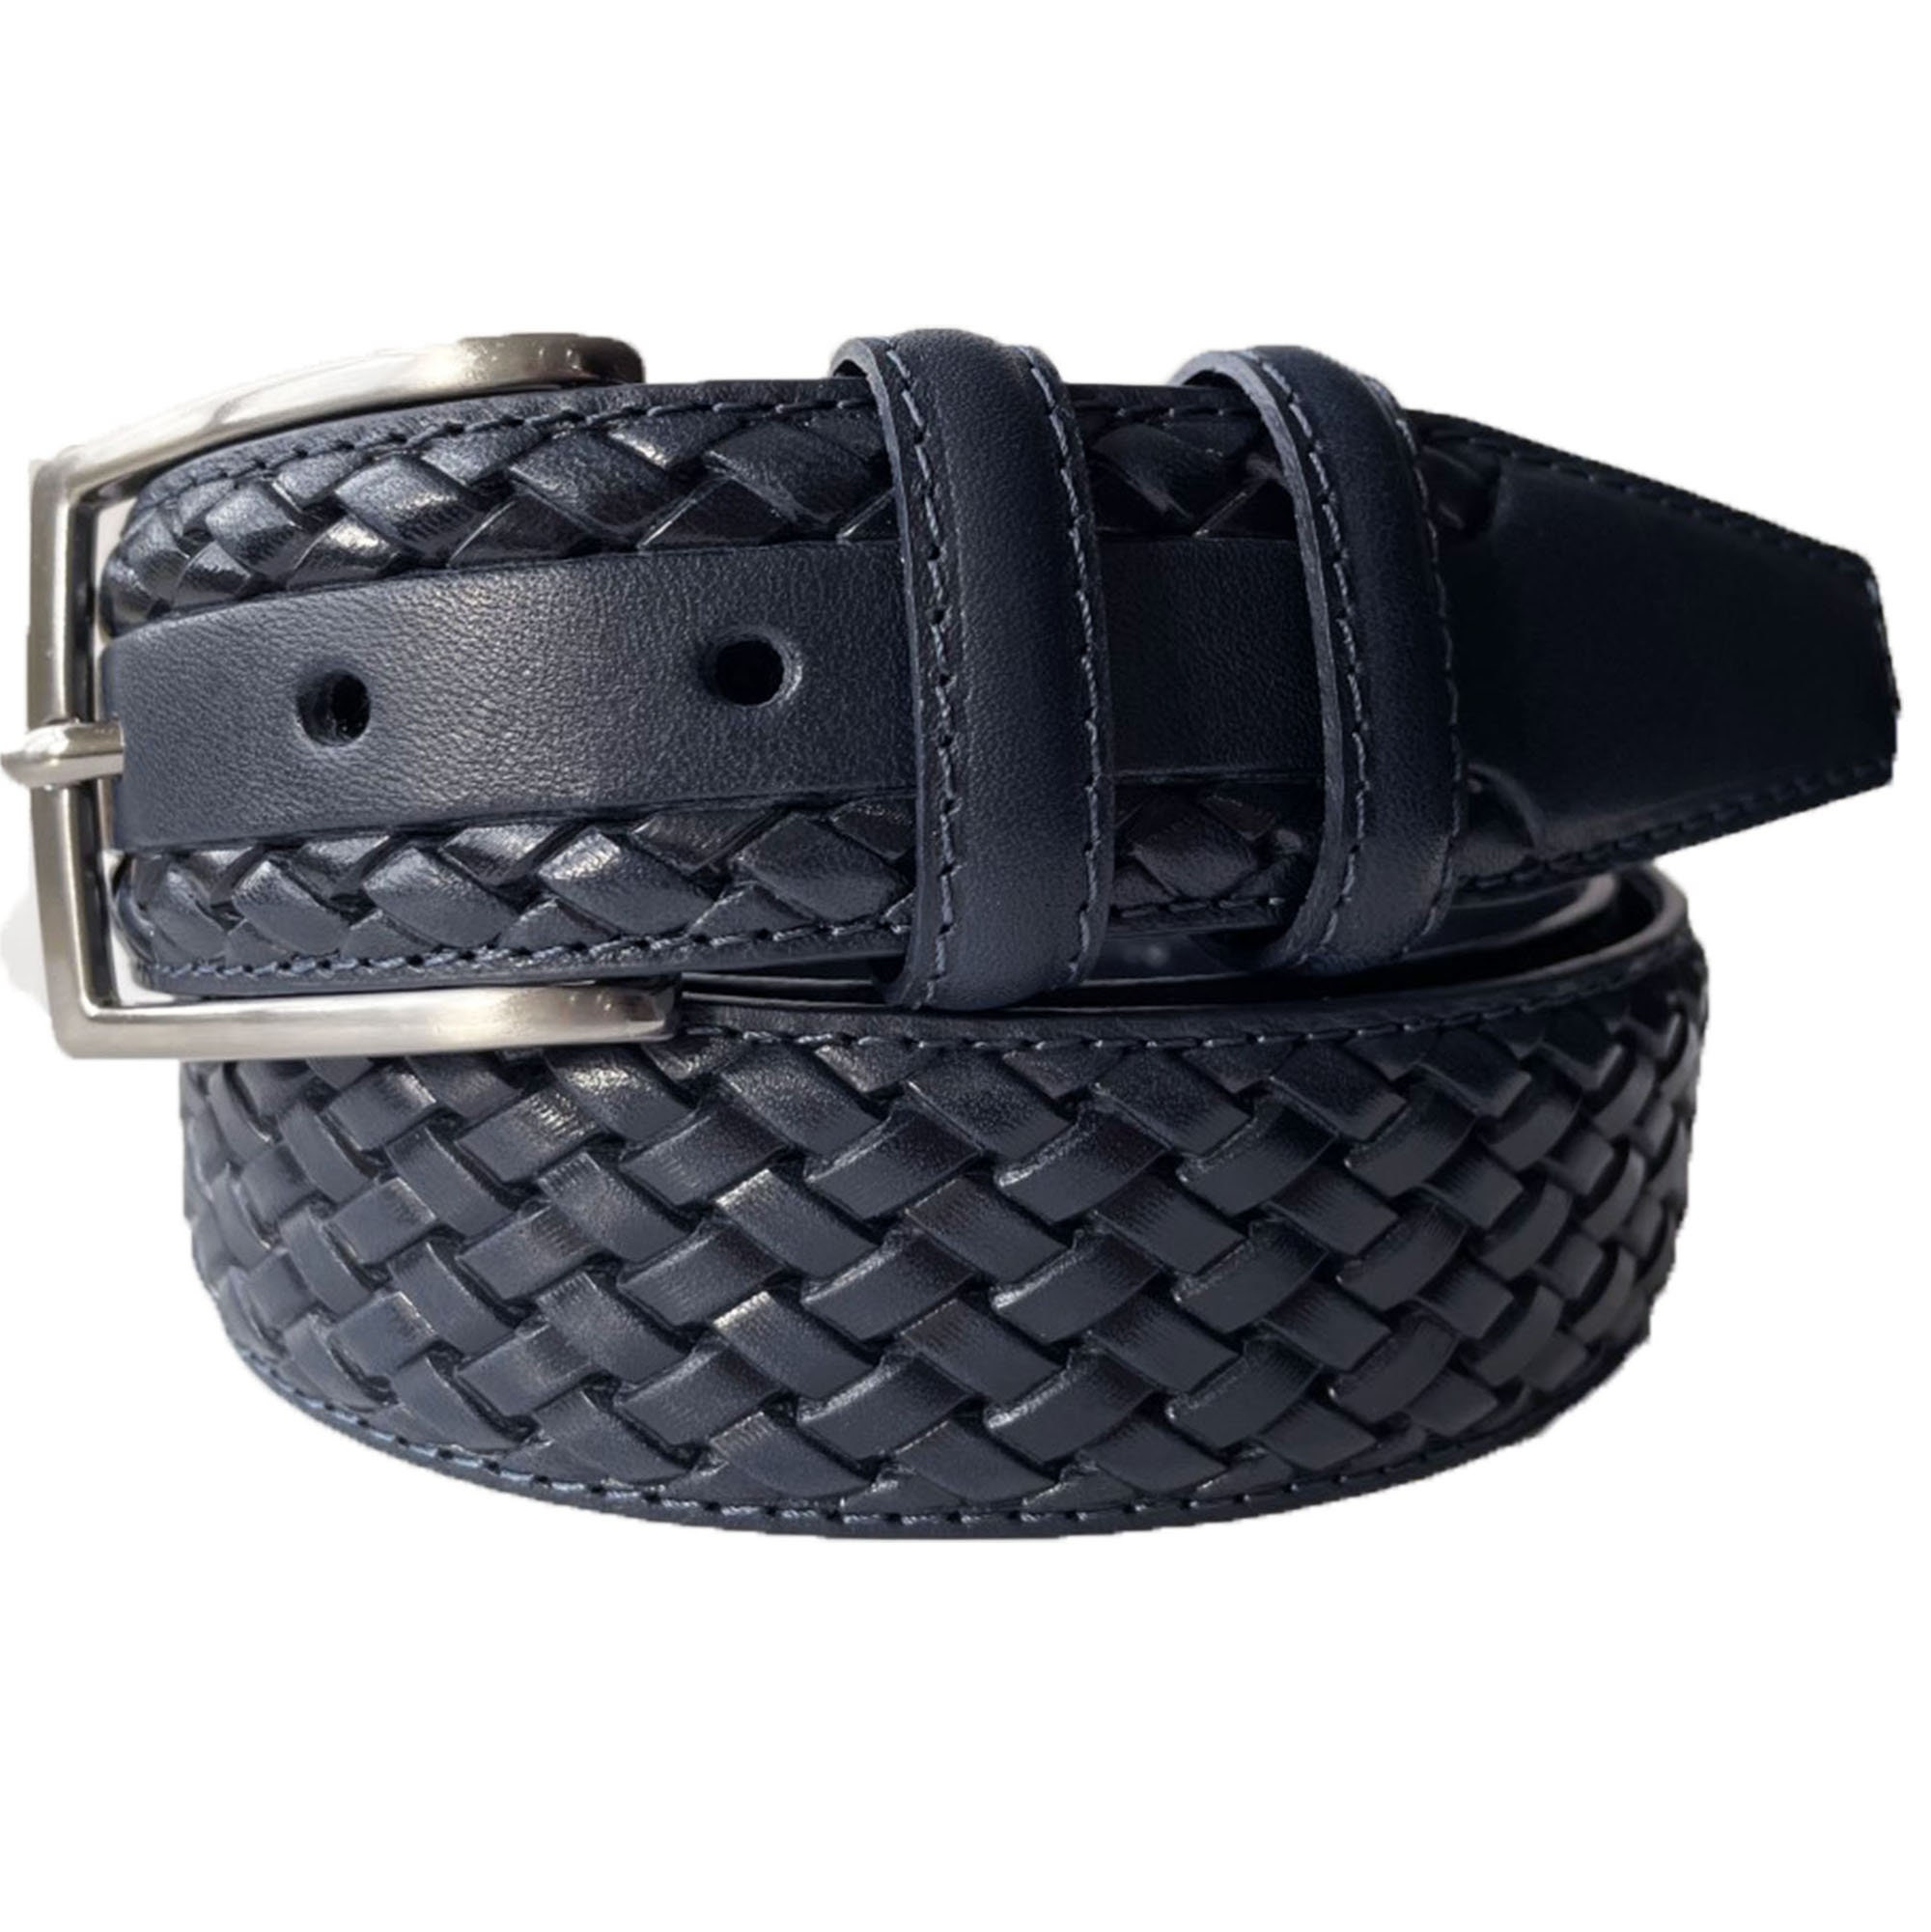 Dark brown braided belt made of saddle leather